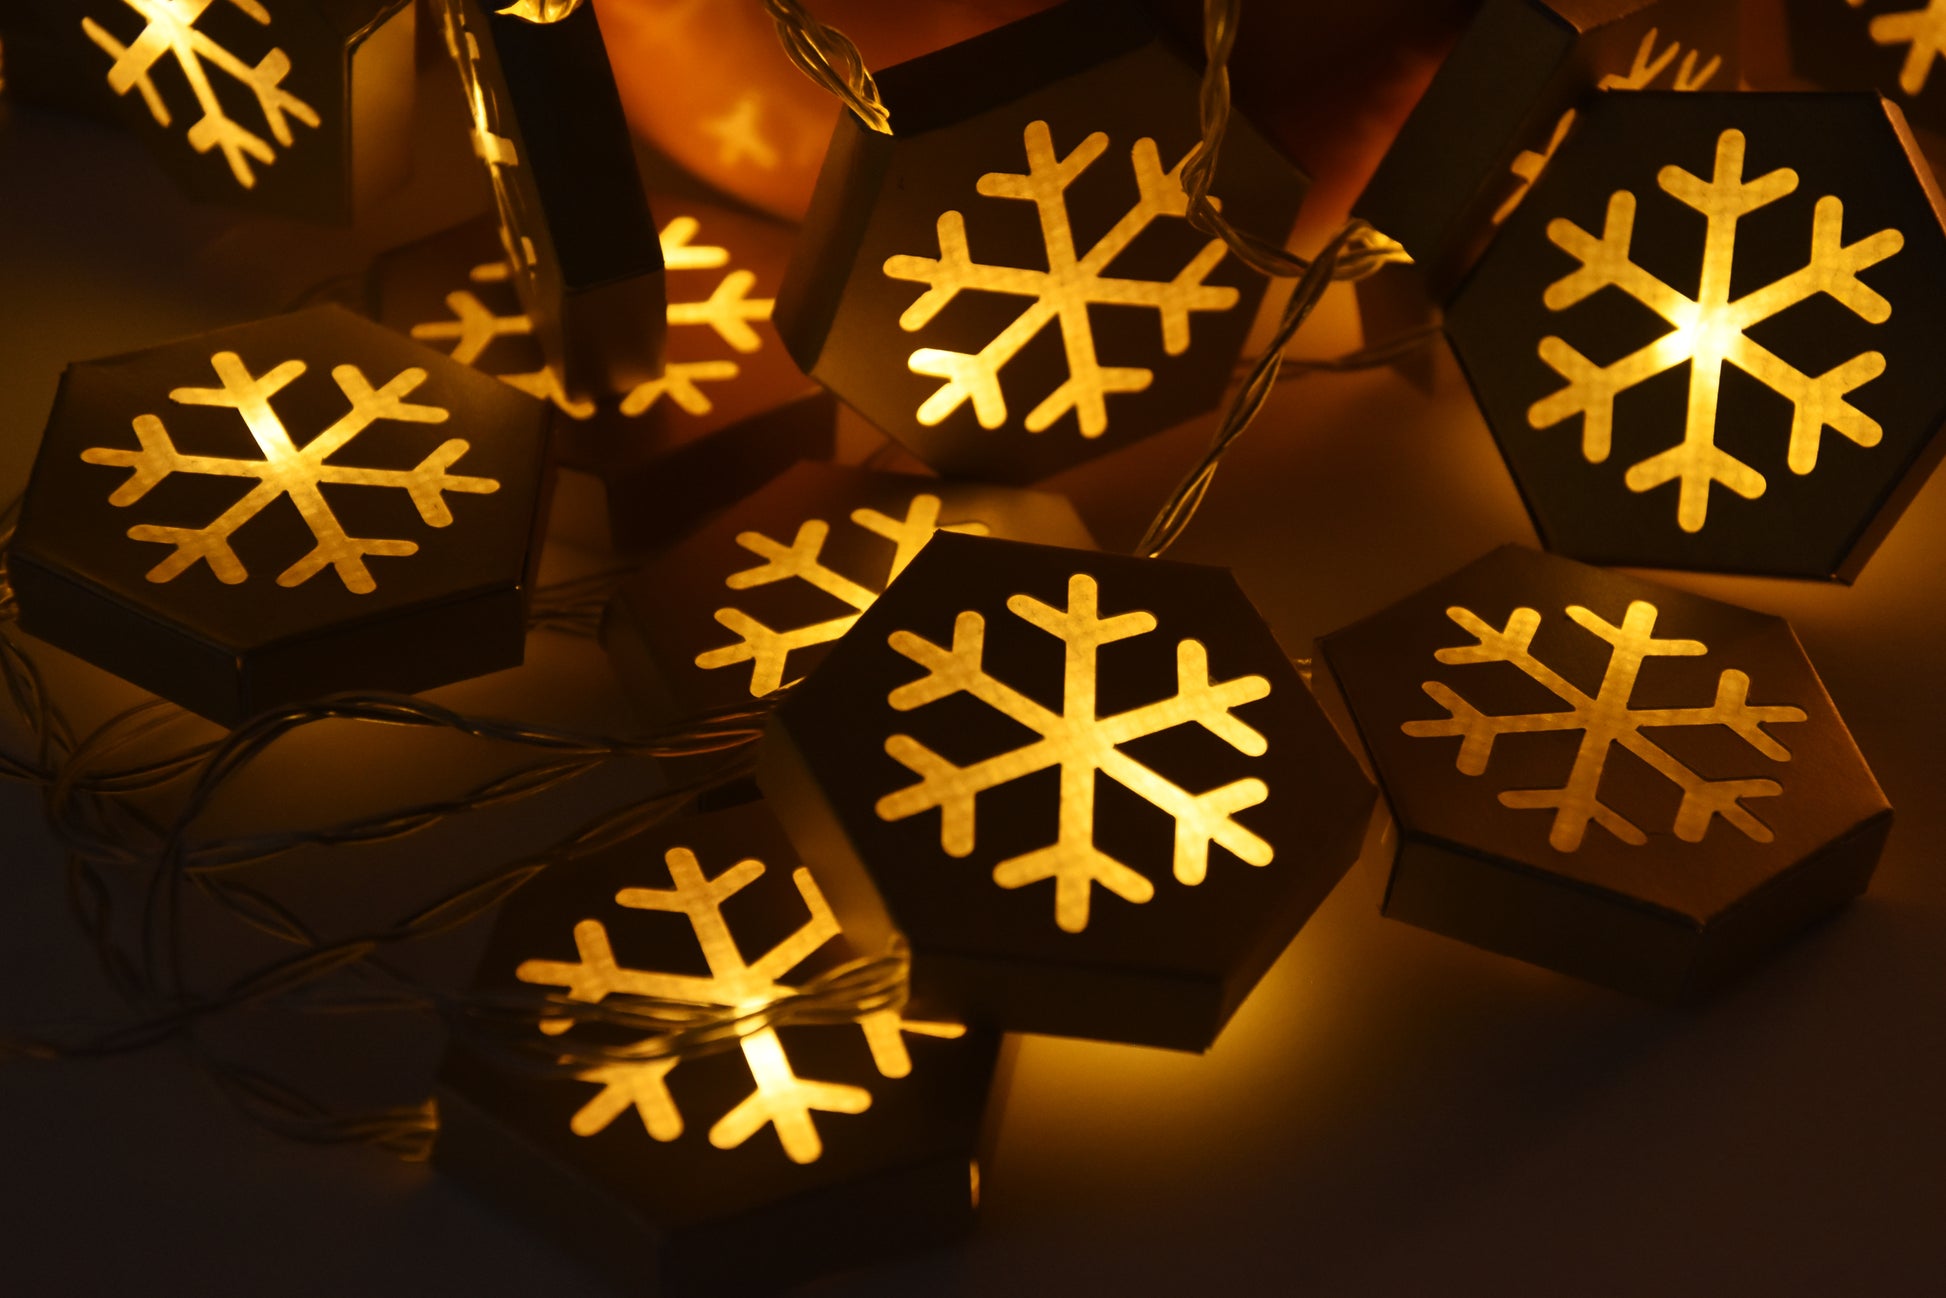 Snowflake motif LED string lights for Christmas tree decoration